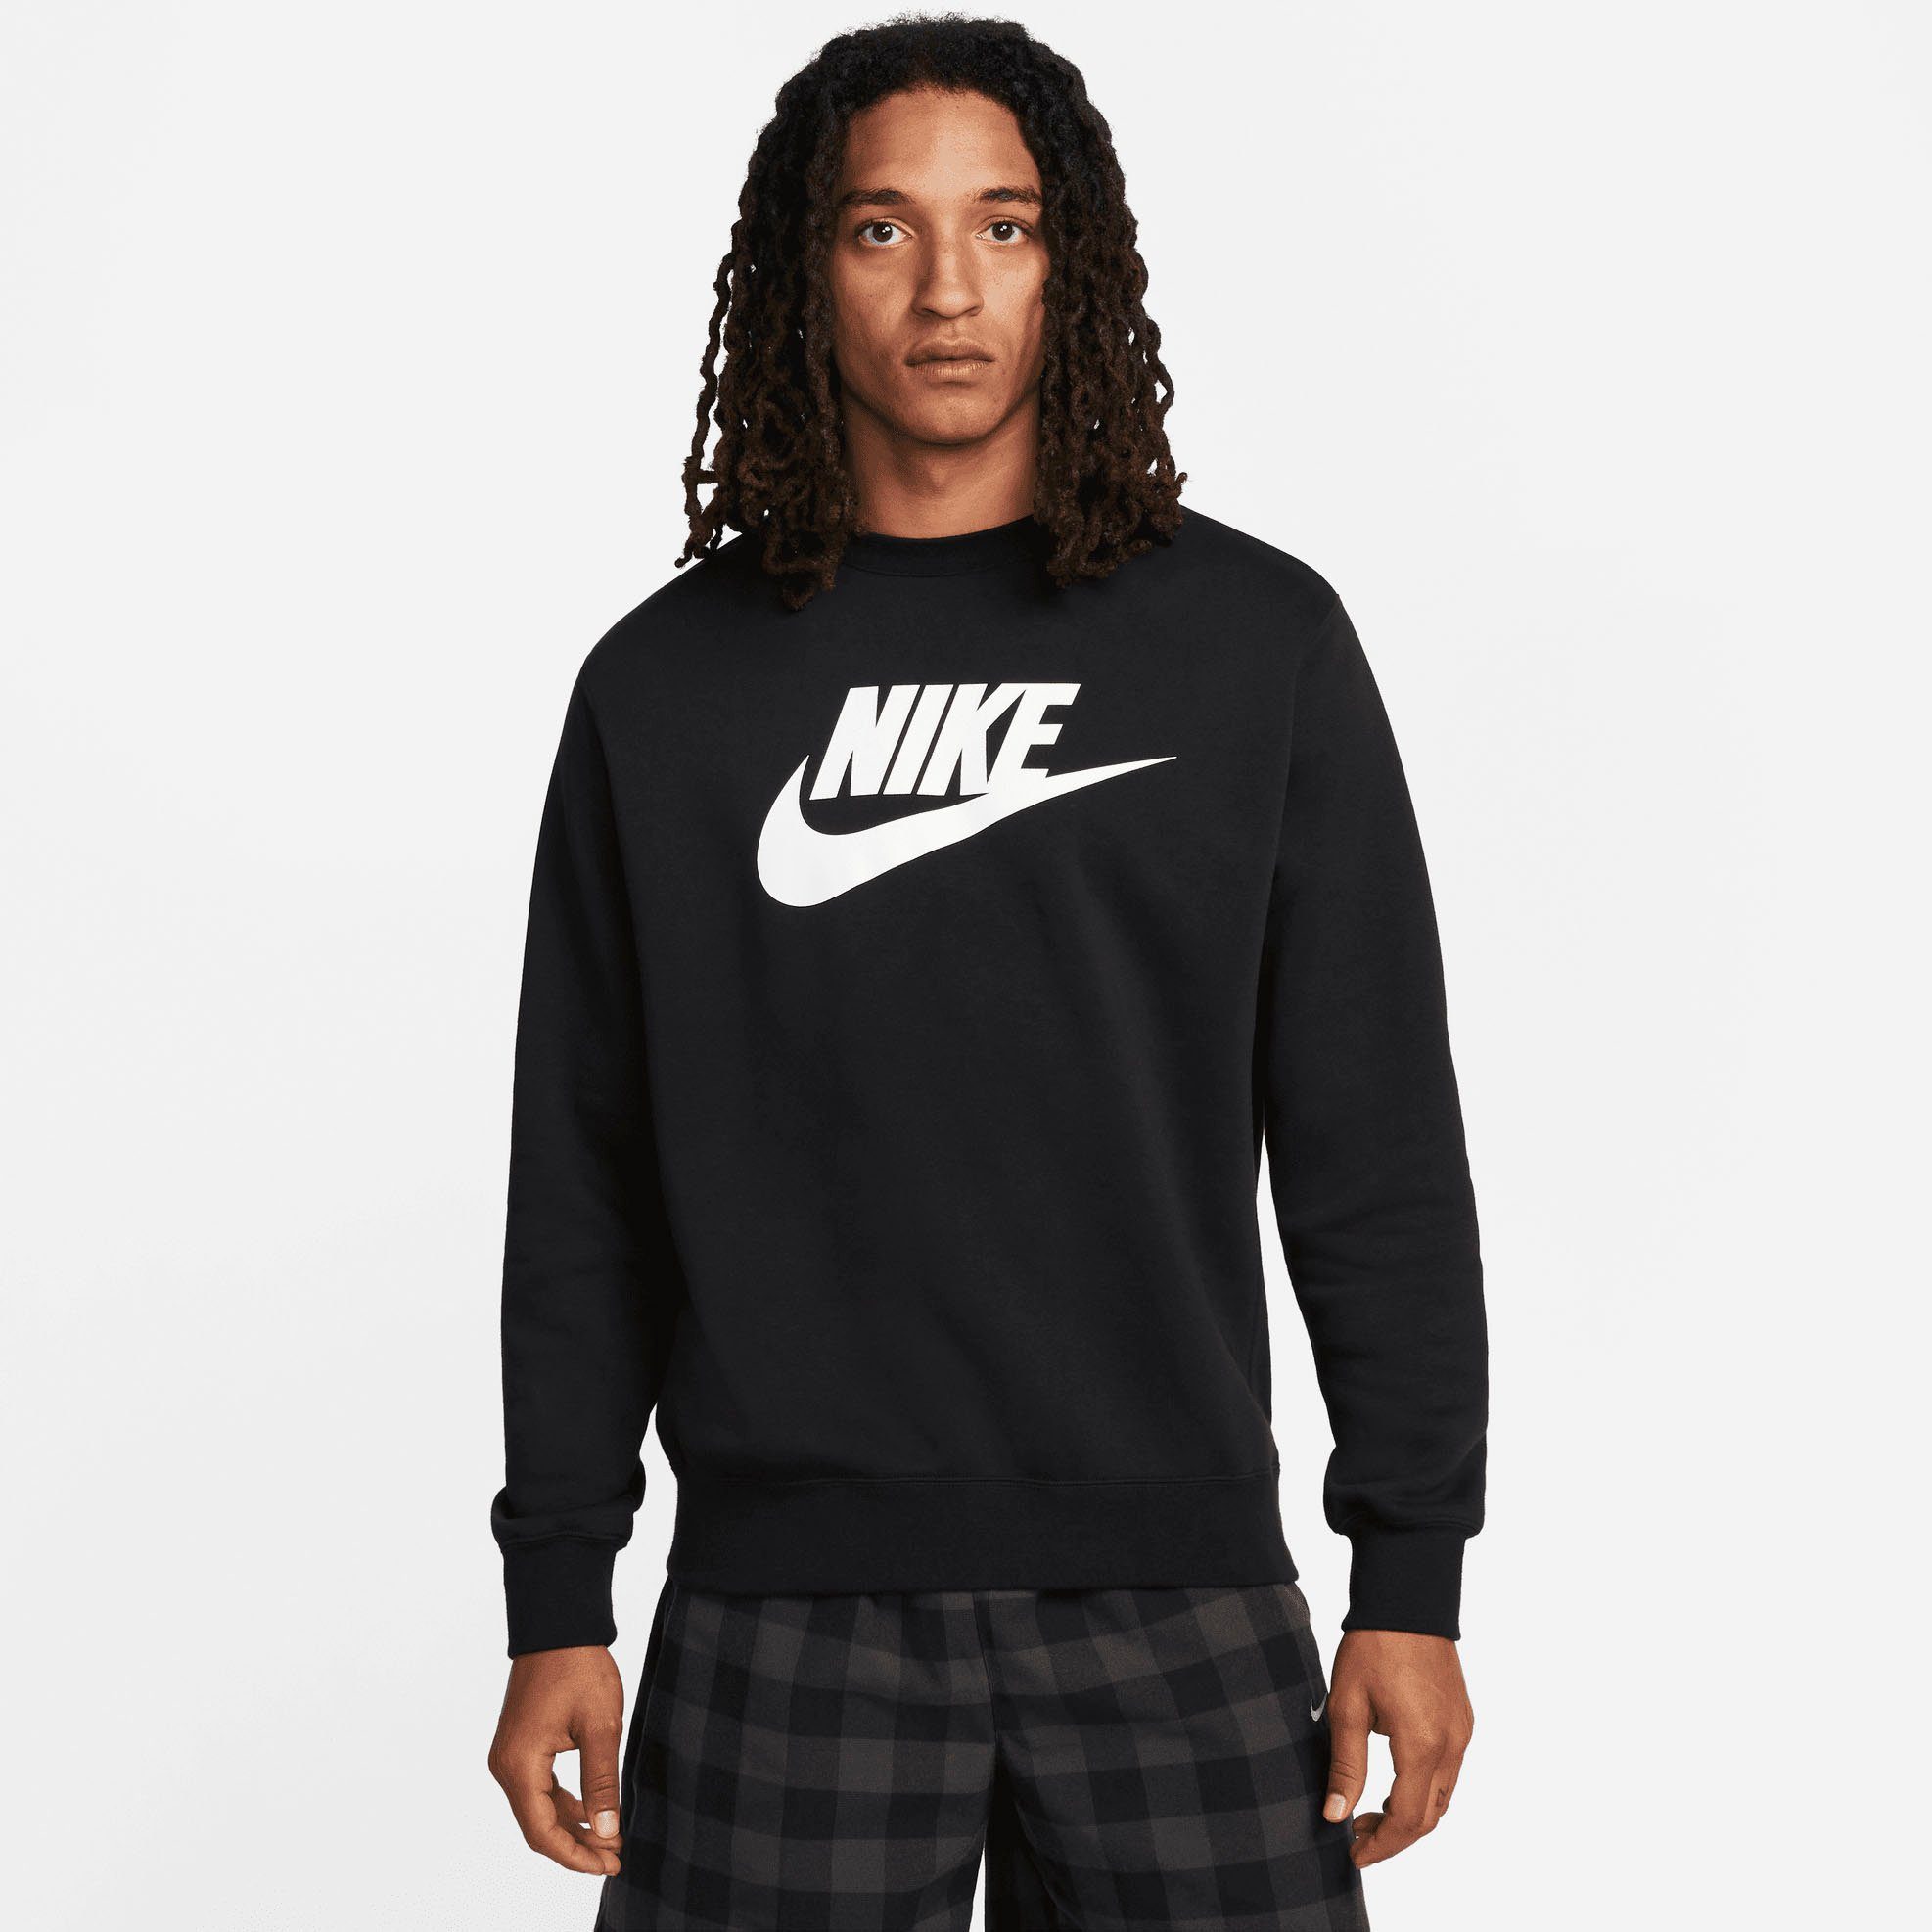 Fleece Sportswear Crew Club BLACK Nike Graphic Sweatshirt Men's